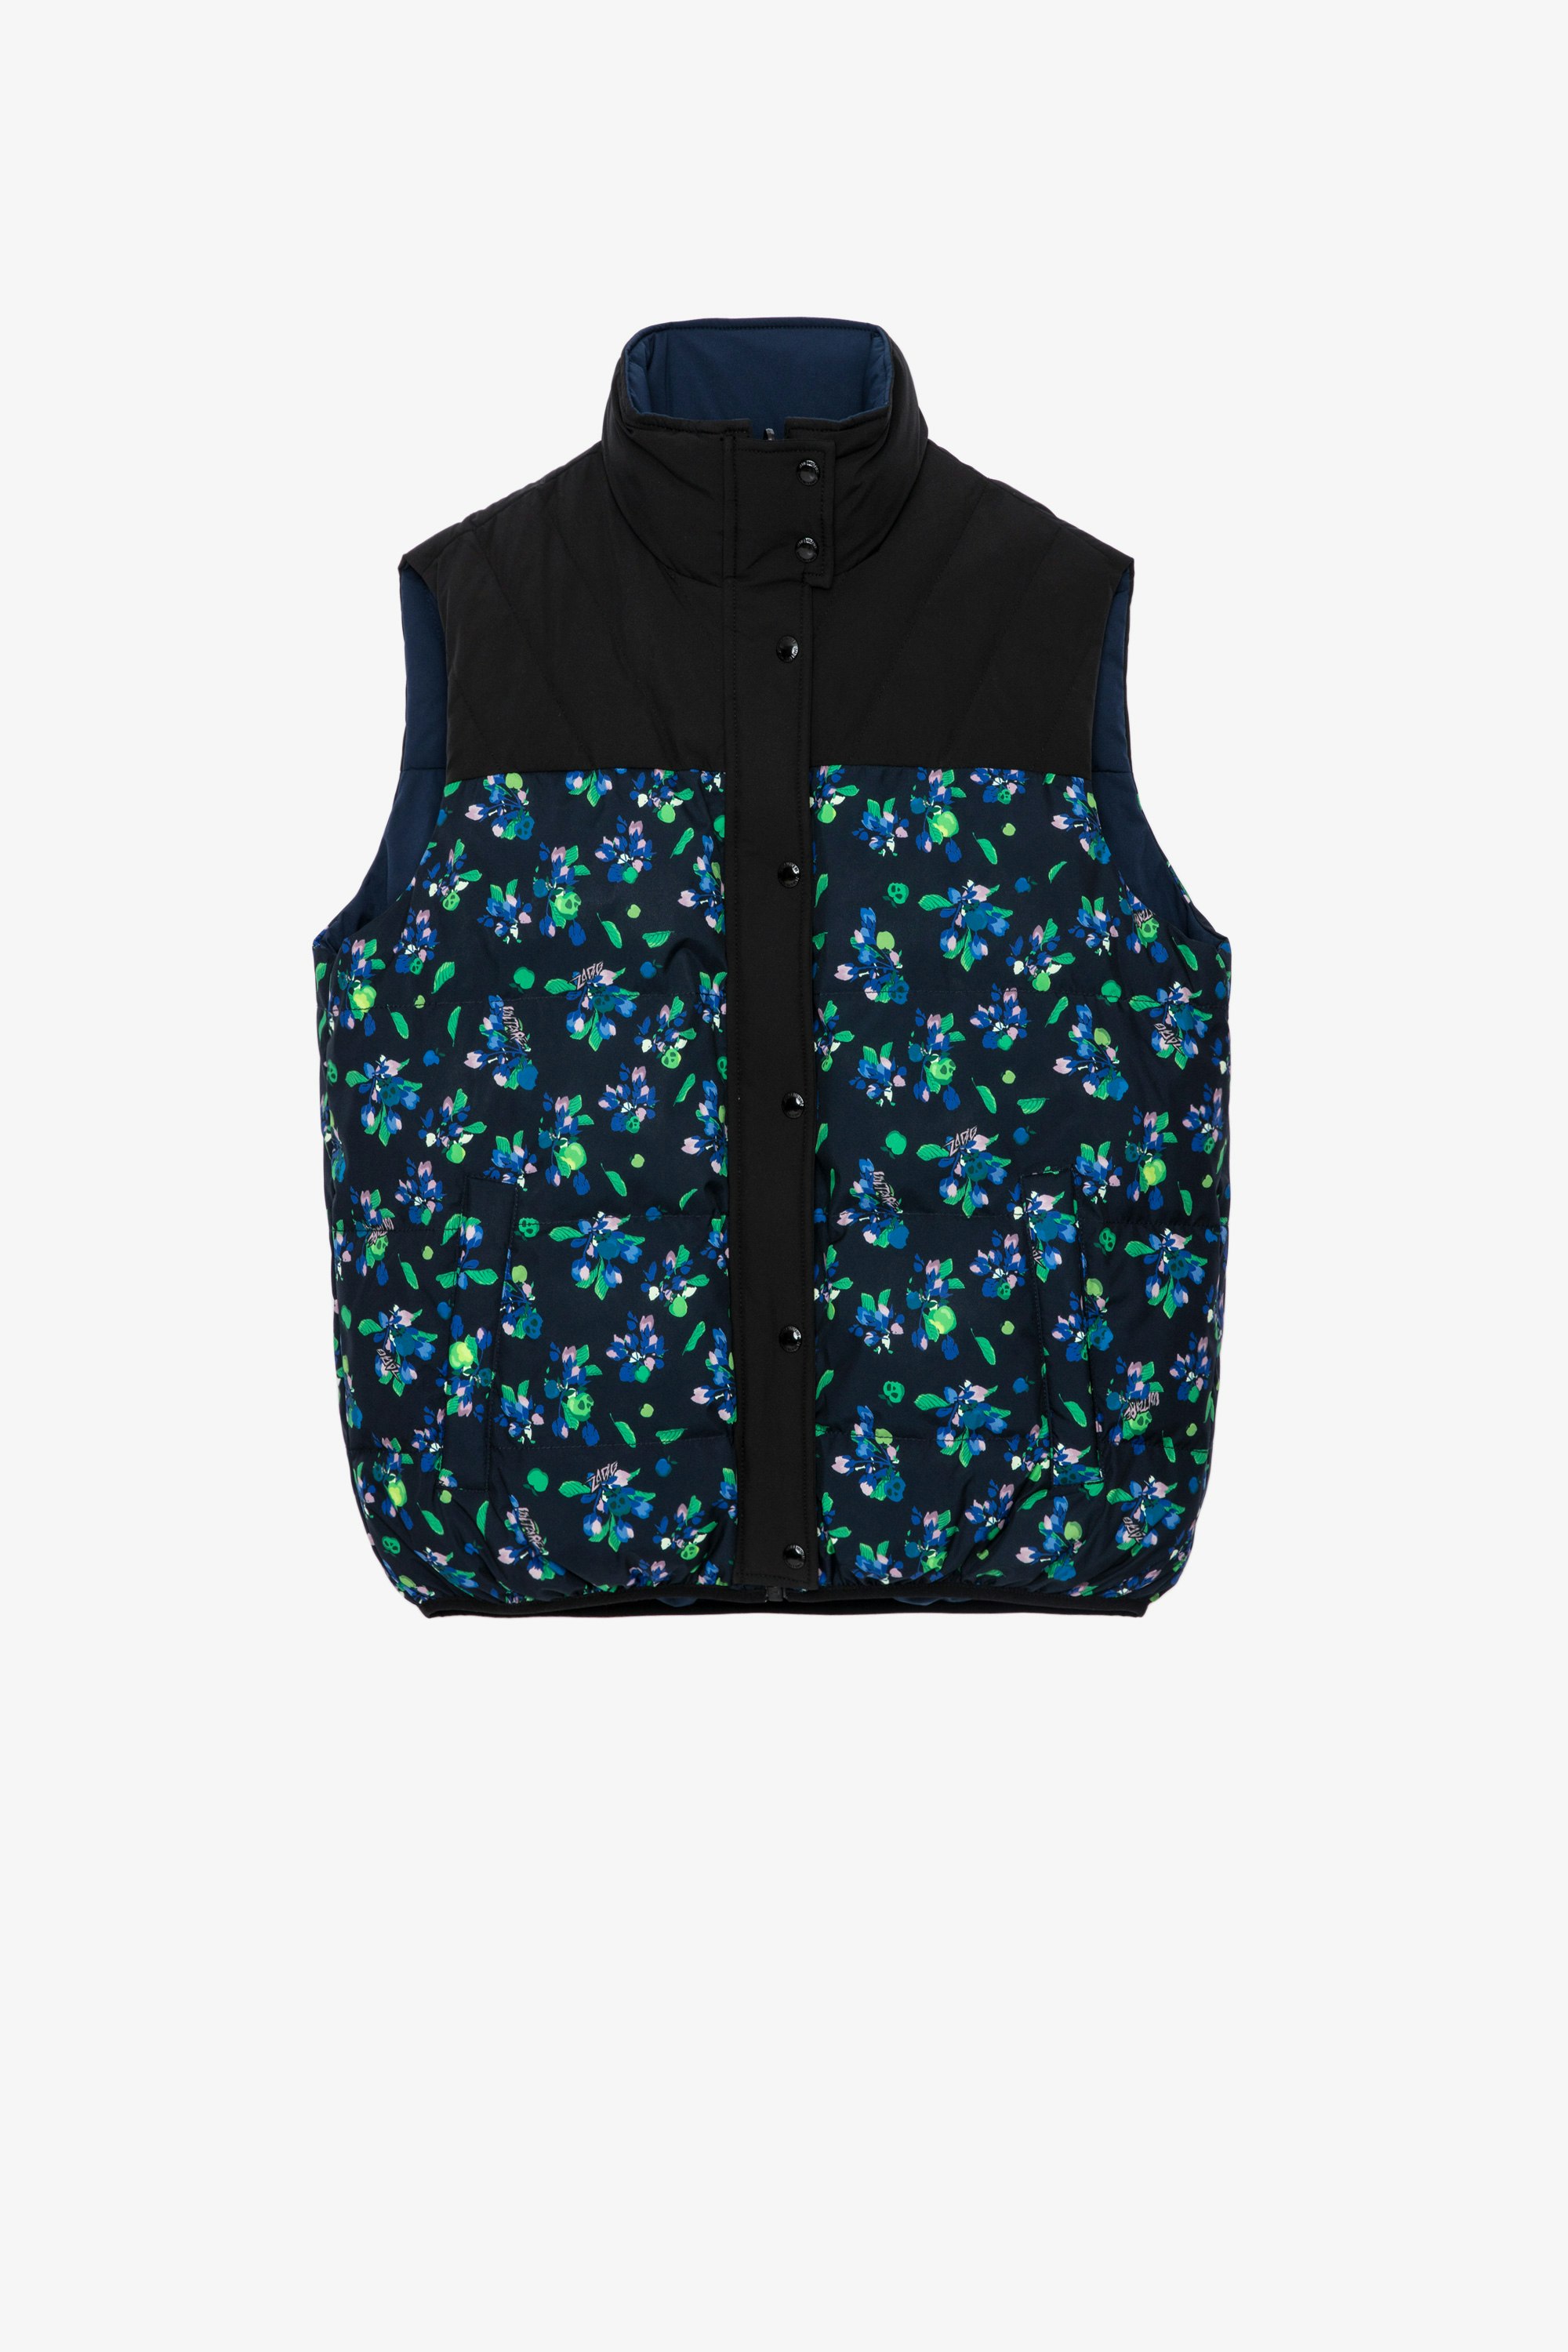 Kera Down Jacket Women’s reversible black sleeveless jacket with floral print